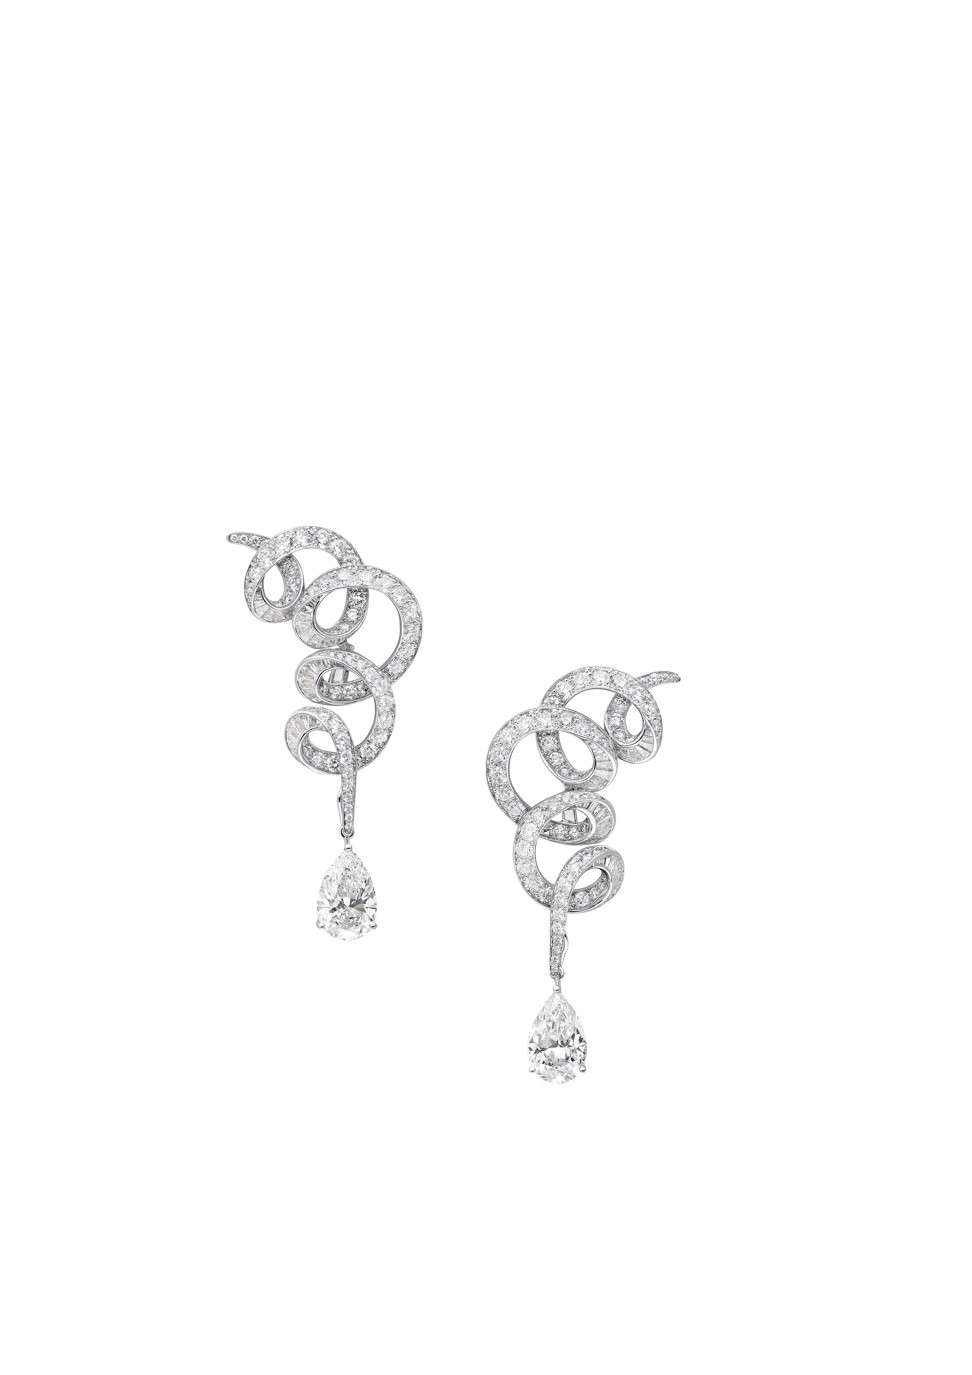 Graff round and pear shape diamond earrings, totalling diamonds 17.12ct